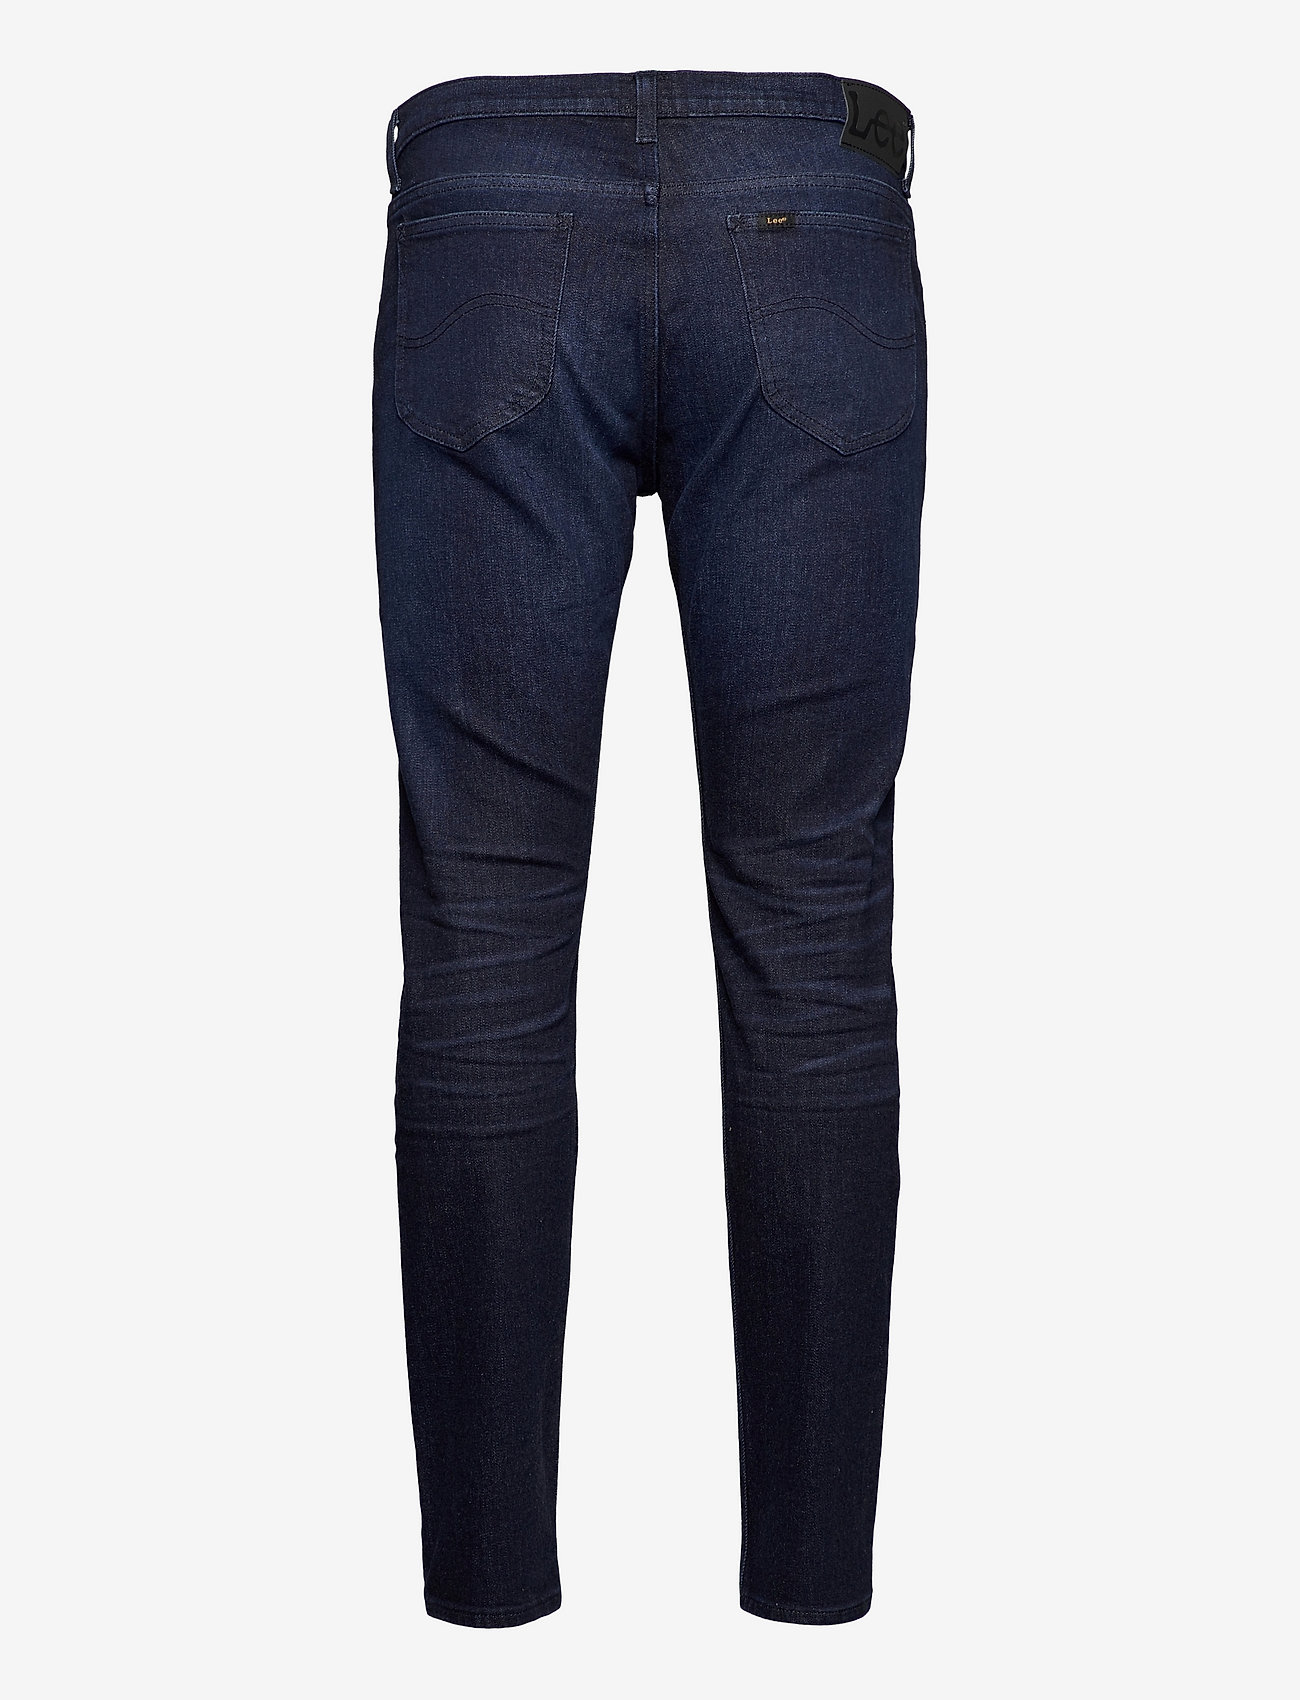 Lee Jeans - RIDER - slim jeans - dk tonal park - 1